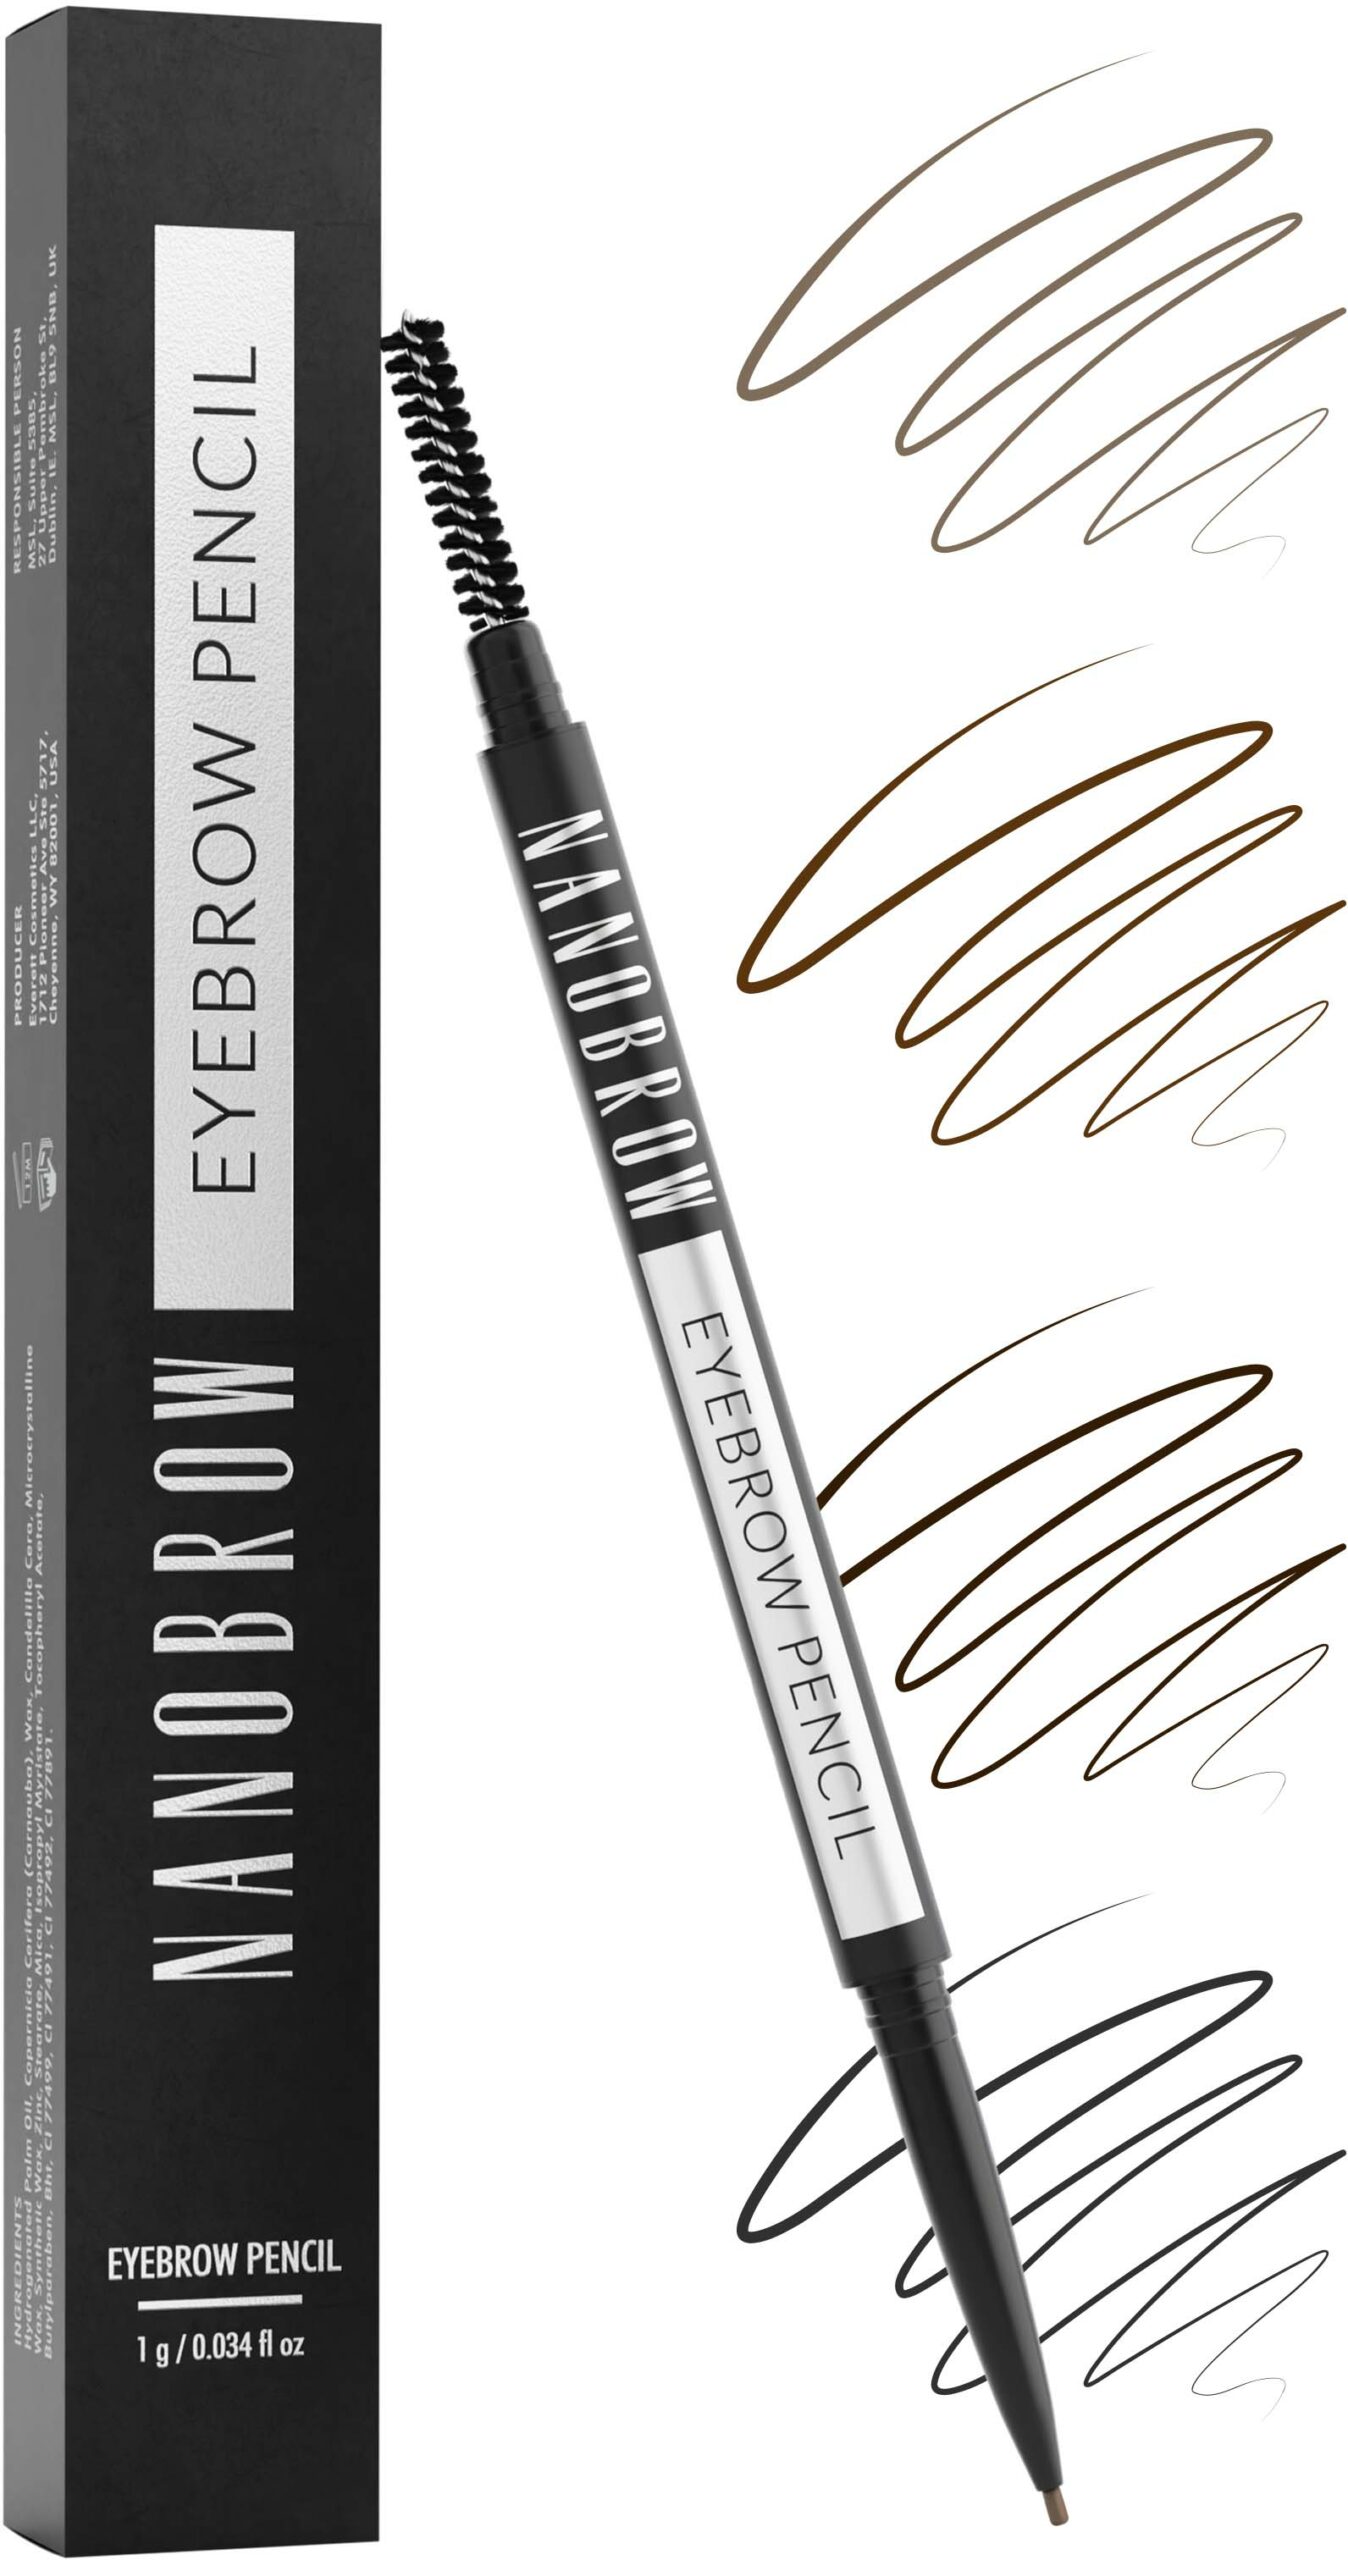 Nanobrow Eyebrow Pencil